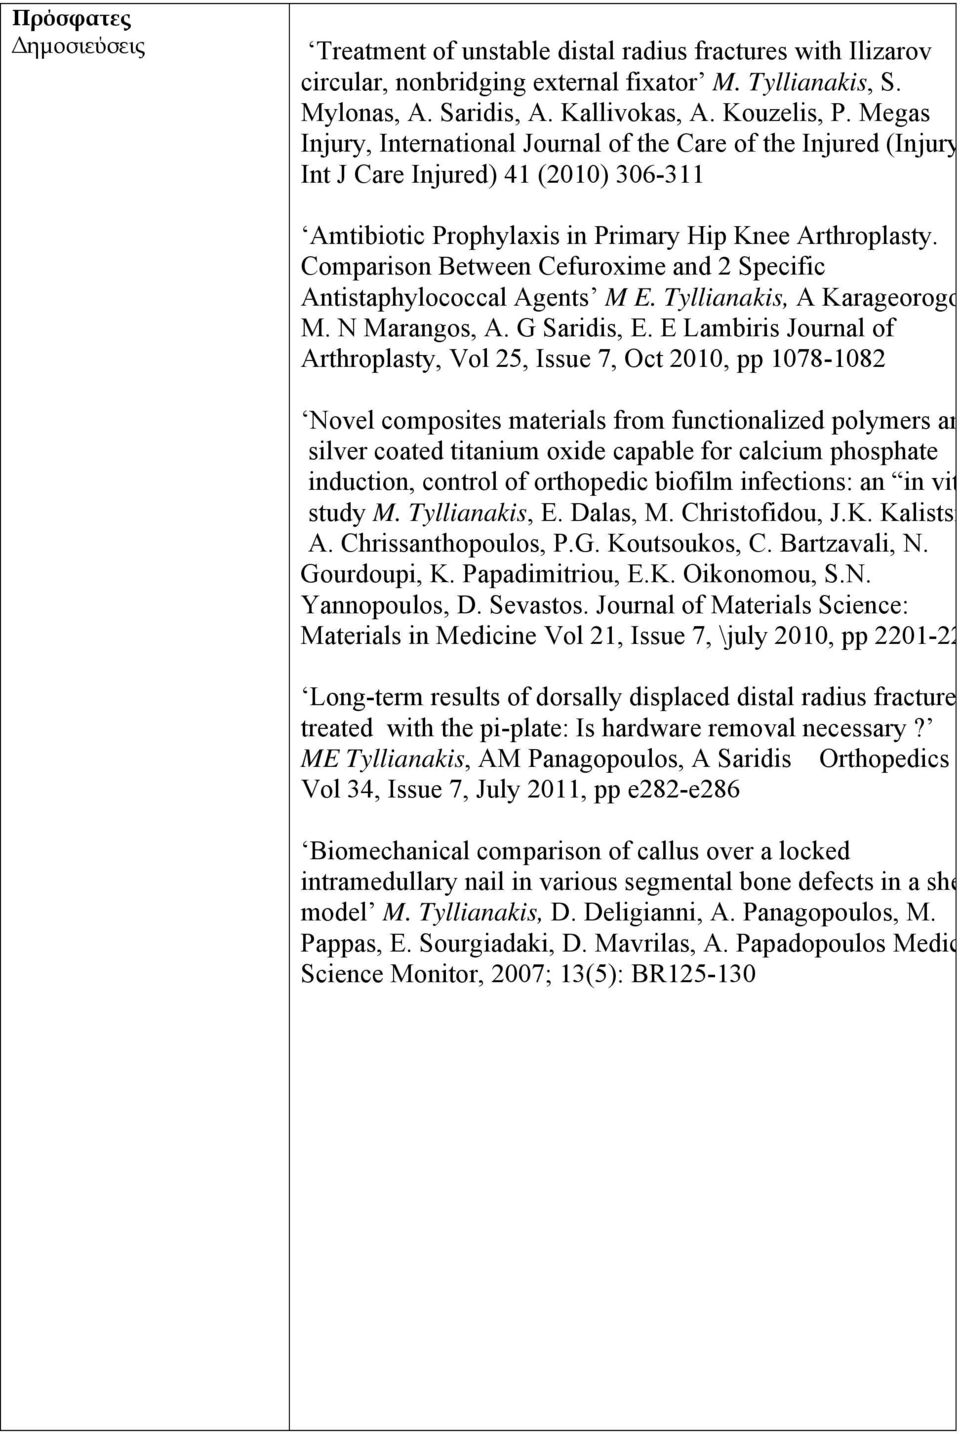 Comparison Between Cefuroxime and 2 Specific Antistaphylococcal Agents M E. Tyllianakis, A Karageorogo M. N Marangos, A. G Saridis, E.